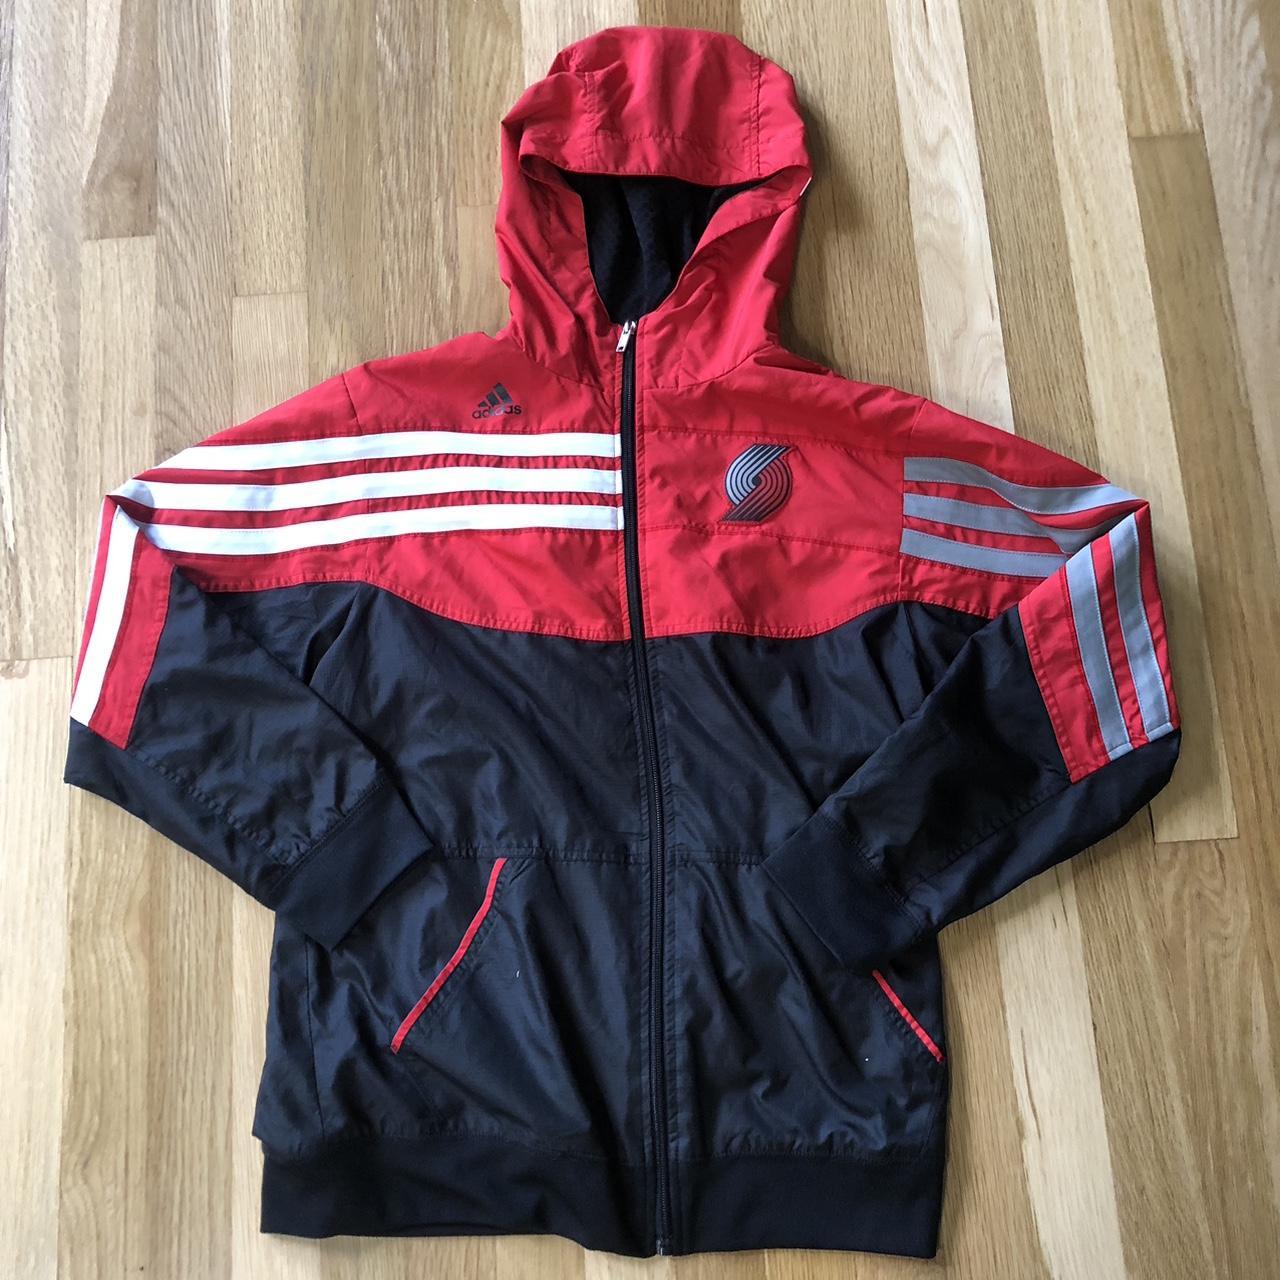 Adidas Black and Red Jacket | Depop